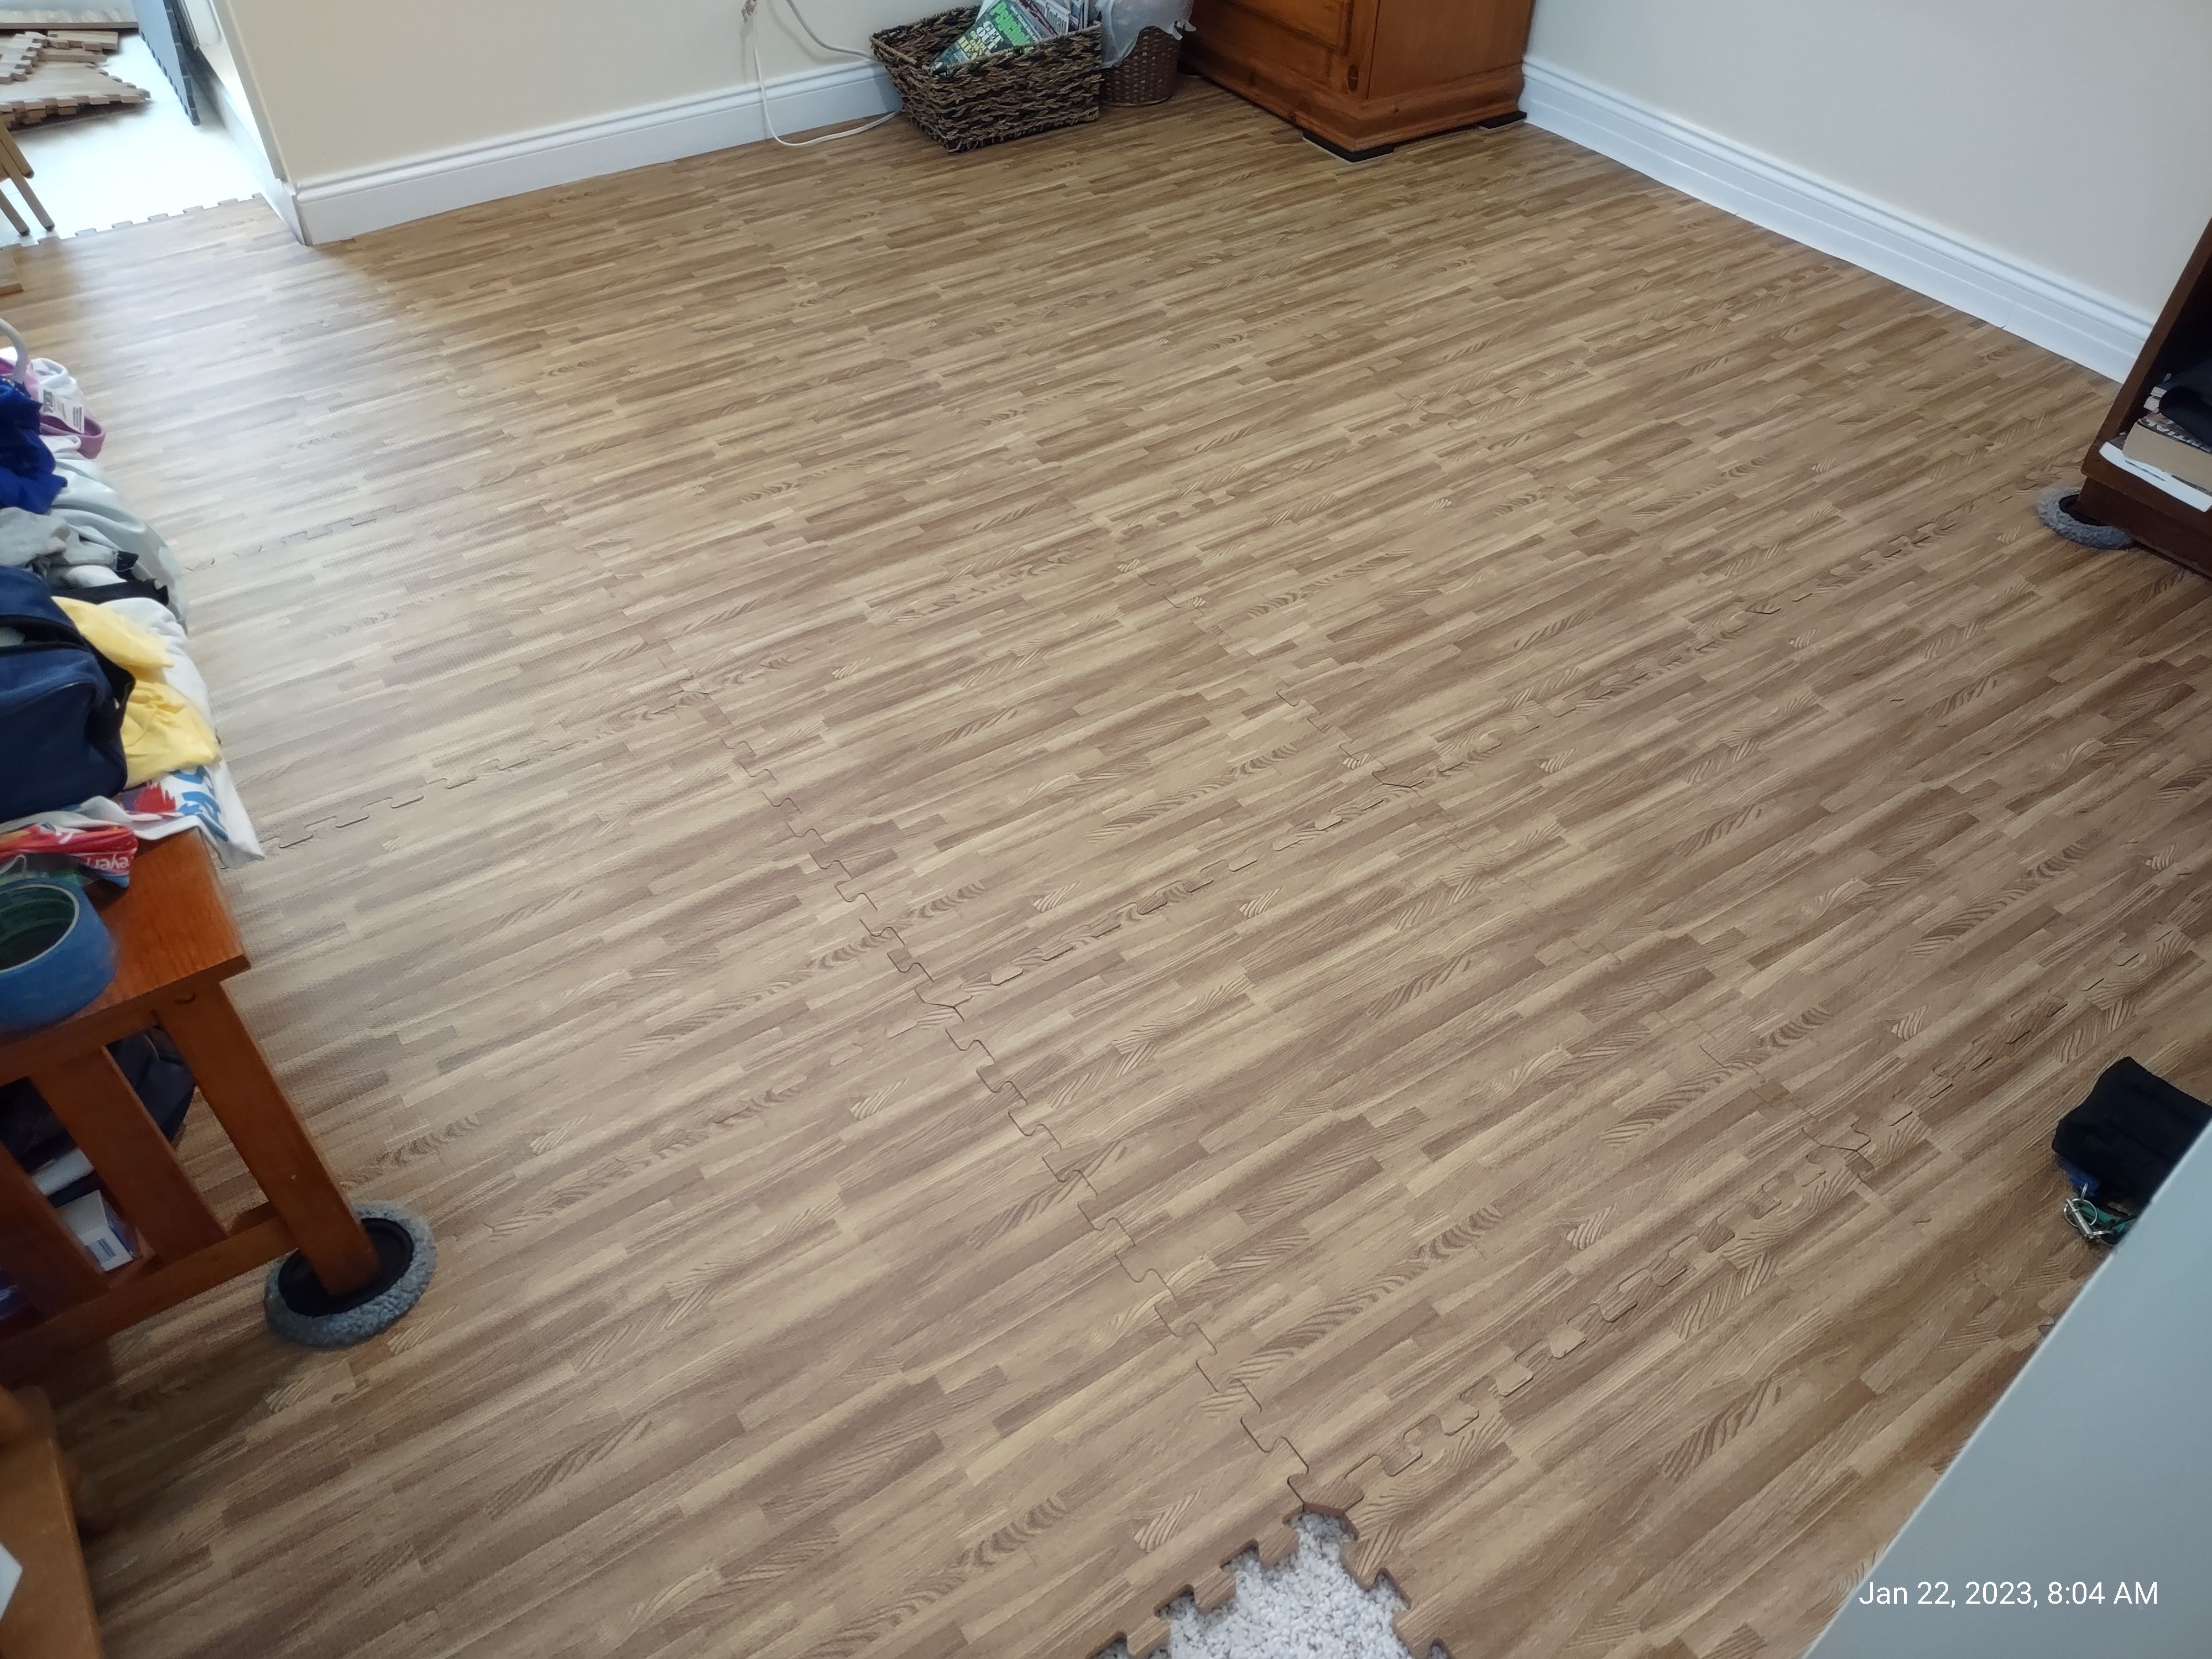 Foam Tiles Rustic Medium Wood Grain 24 in. W x 24 in. L Foam Home  Interlocking Floor Tile (58.12 sq. ft.) (Case of 15)